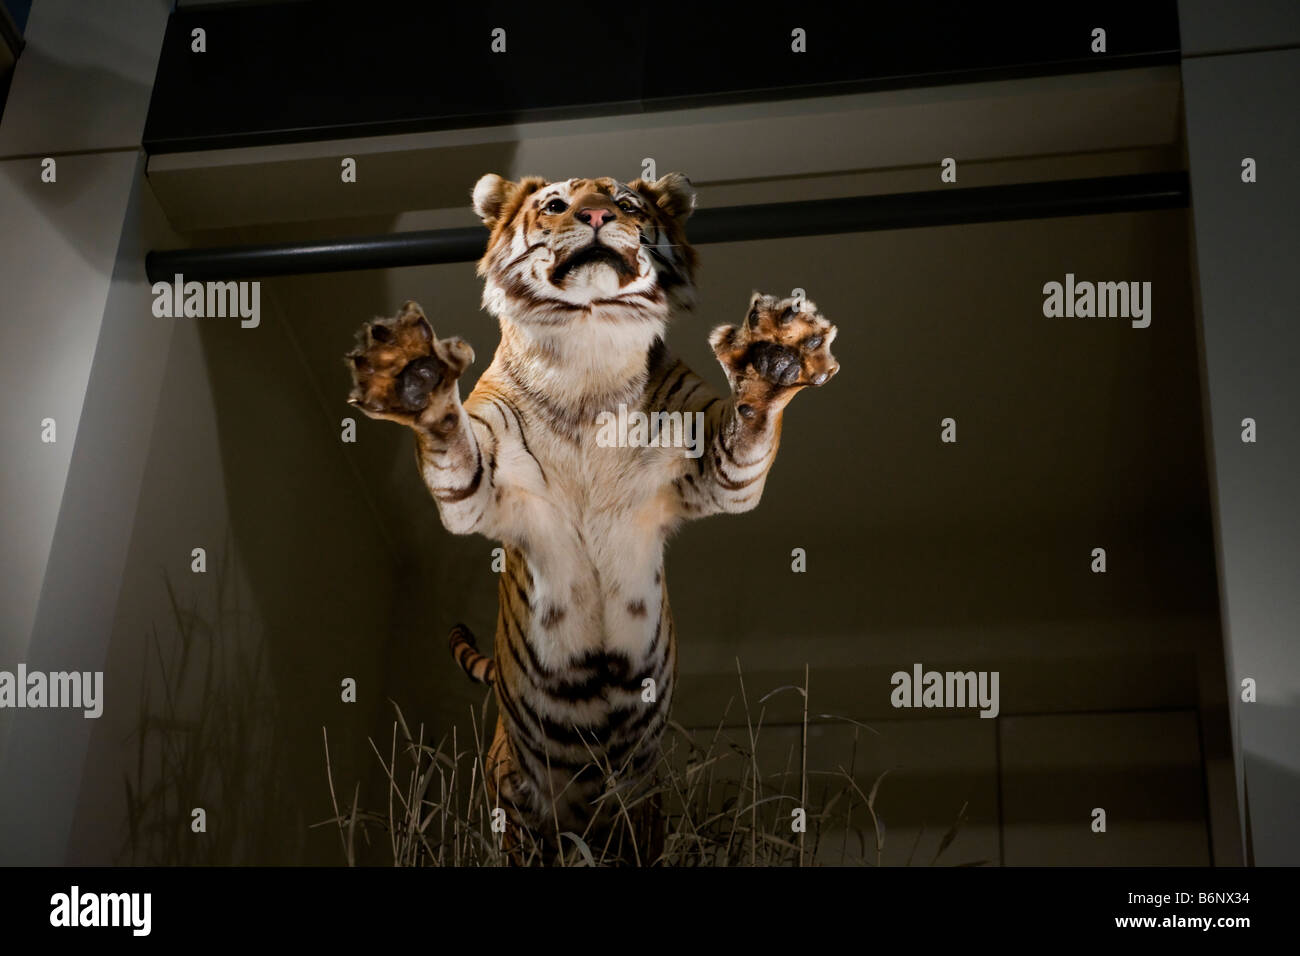 Stuffed leaping Bengal tiger - USA Stock Photo